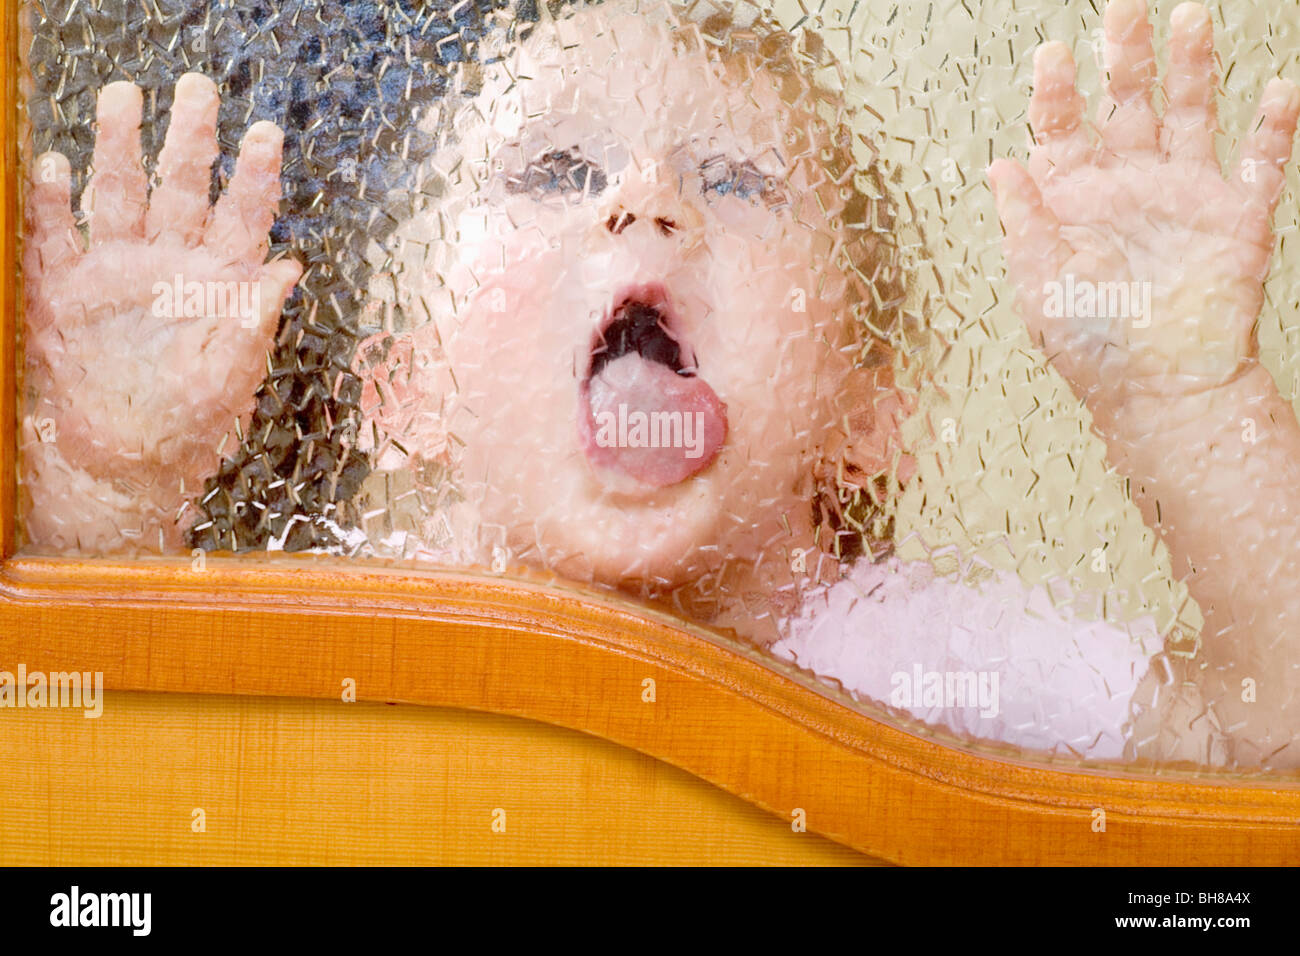 A child licking a beveled glass window Stock Photo